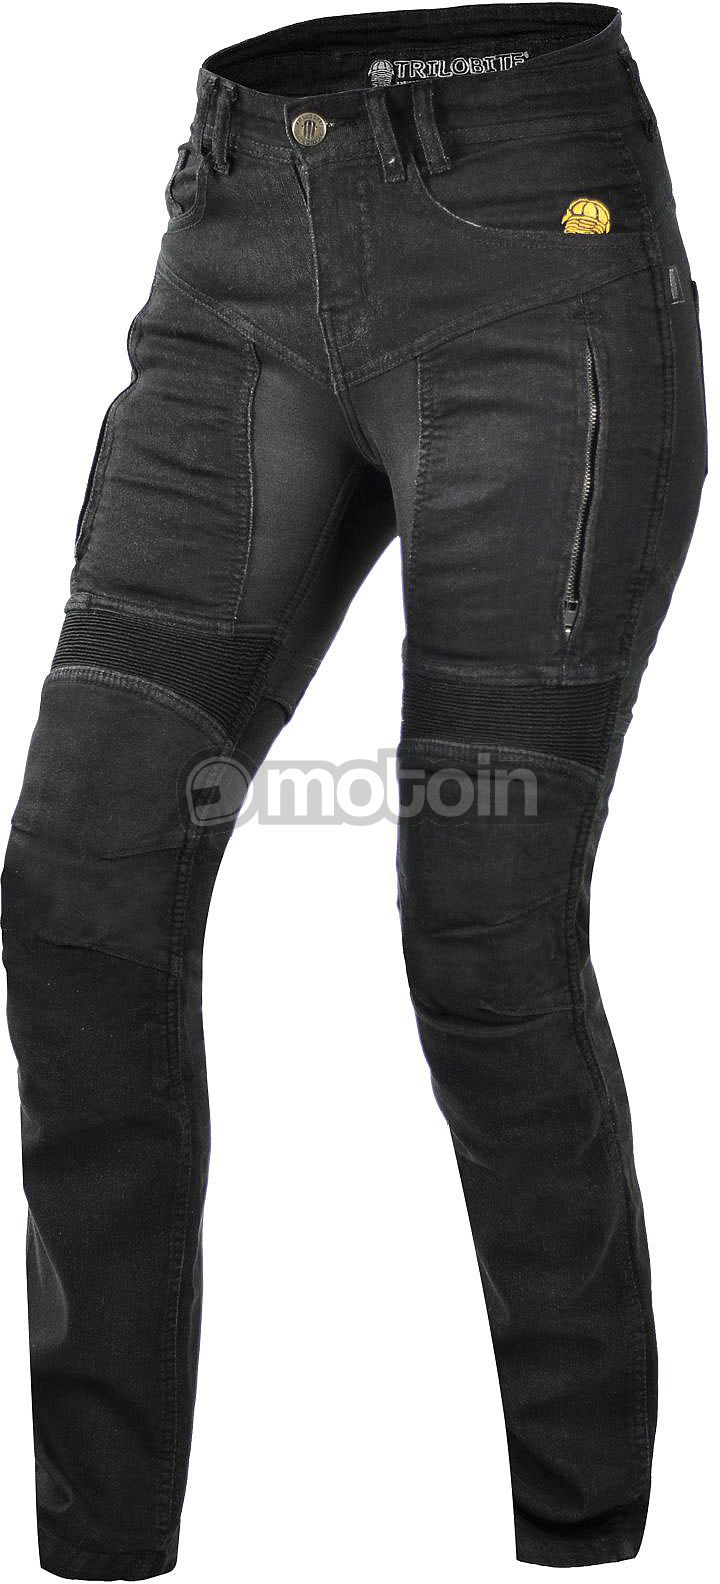 Trilobite Parado Slim-Fit, jeans kvinder